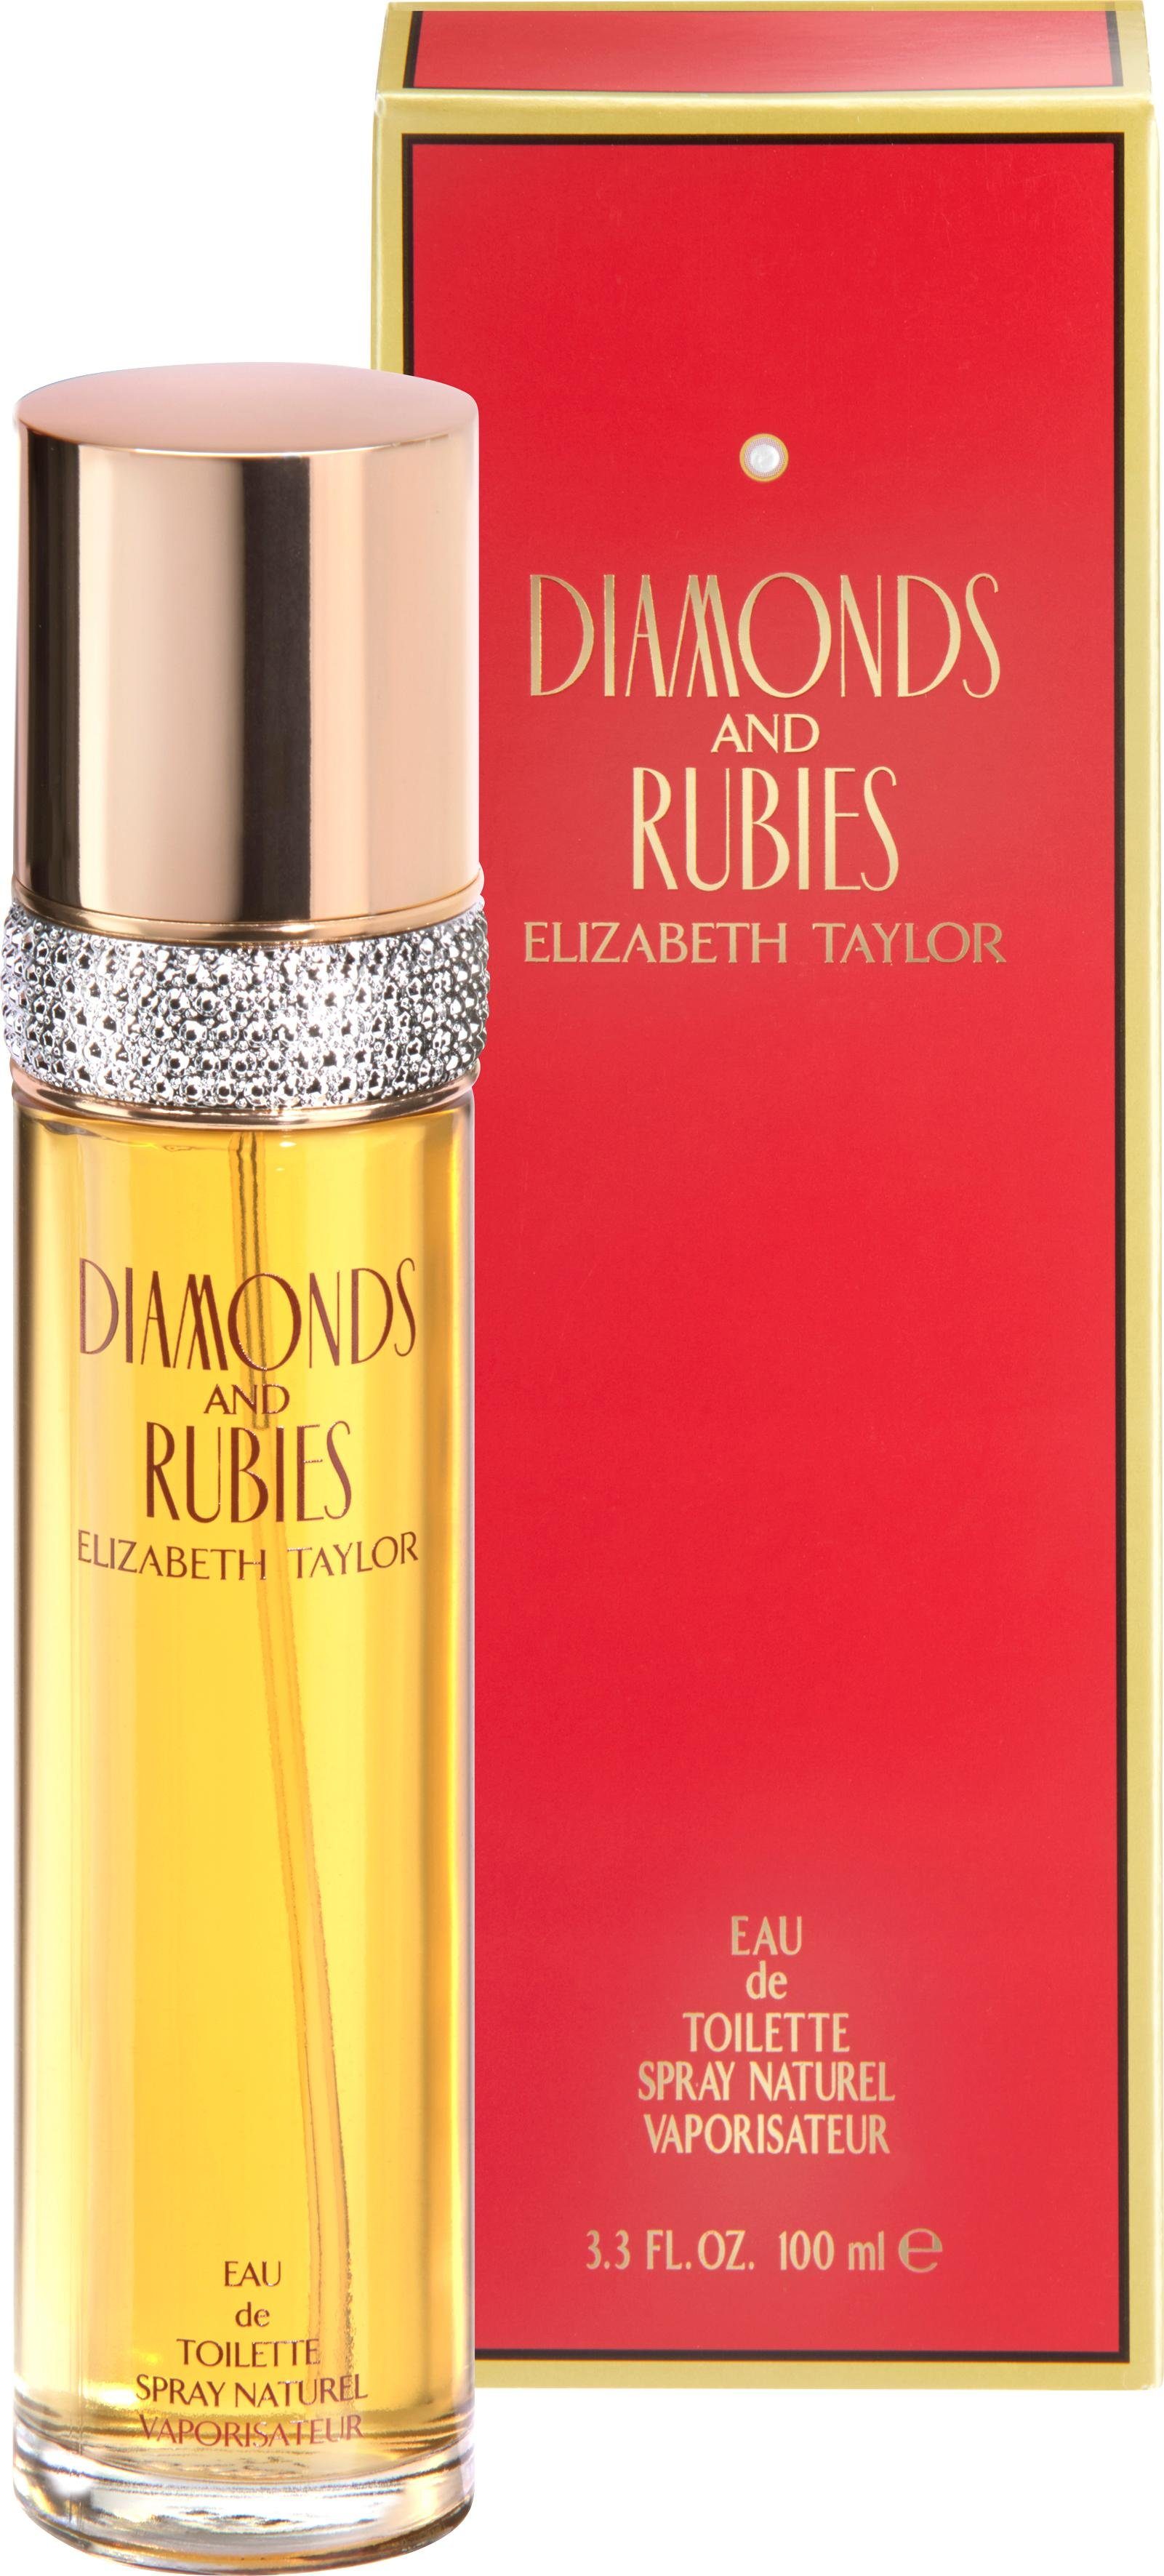 Eau & Diamonds Rubies Elizabeth Taylor Toilette de